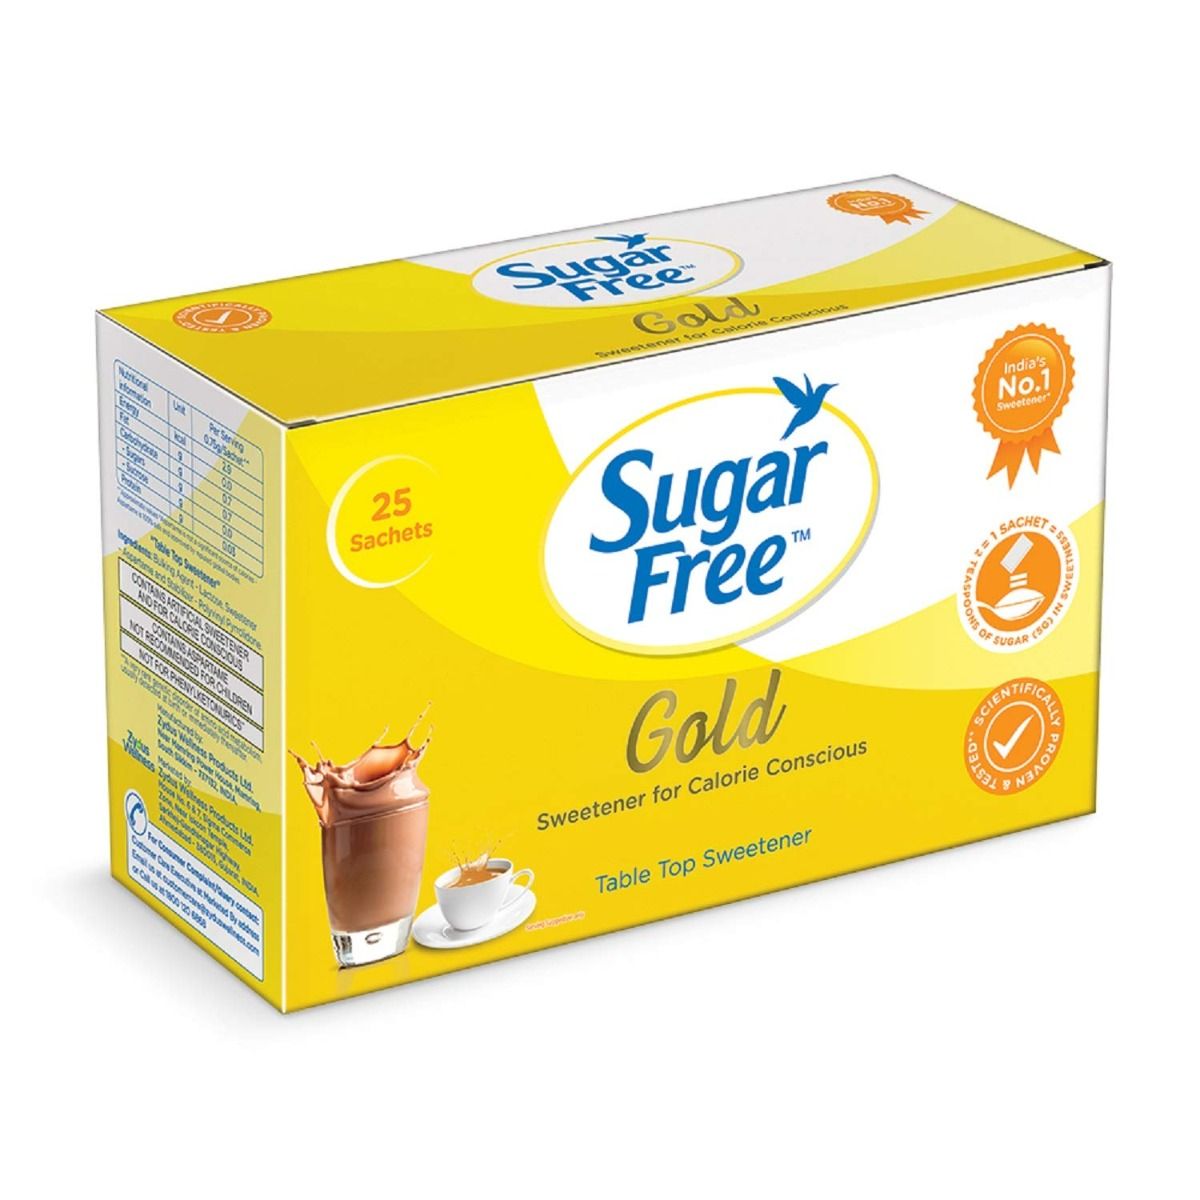 Buy Sugar Free Gold Low Calorie Sweetener, 25 Sachets Online